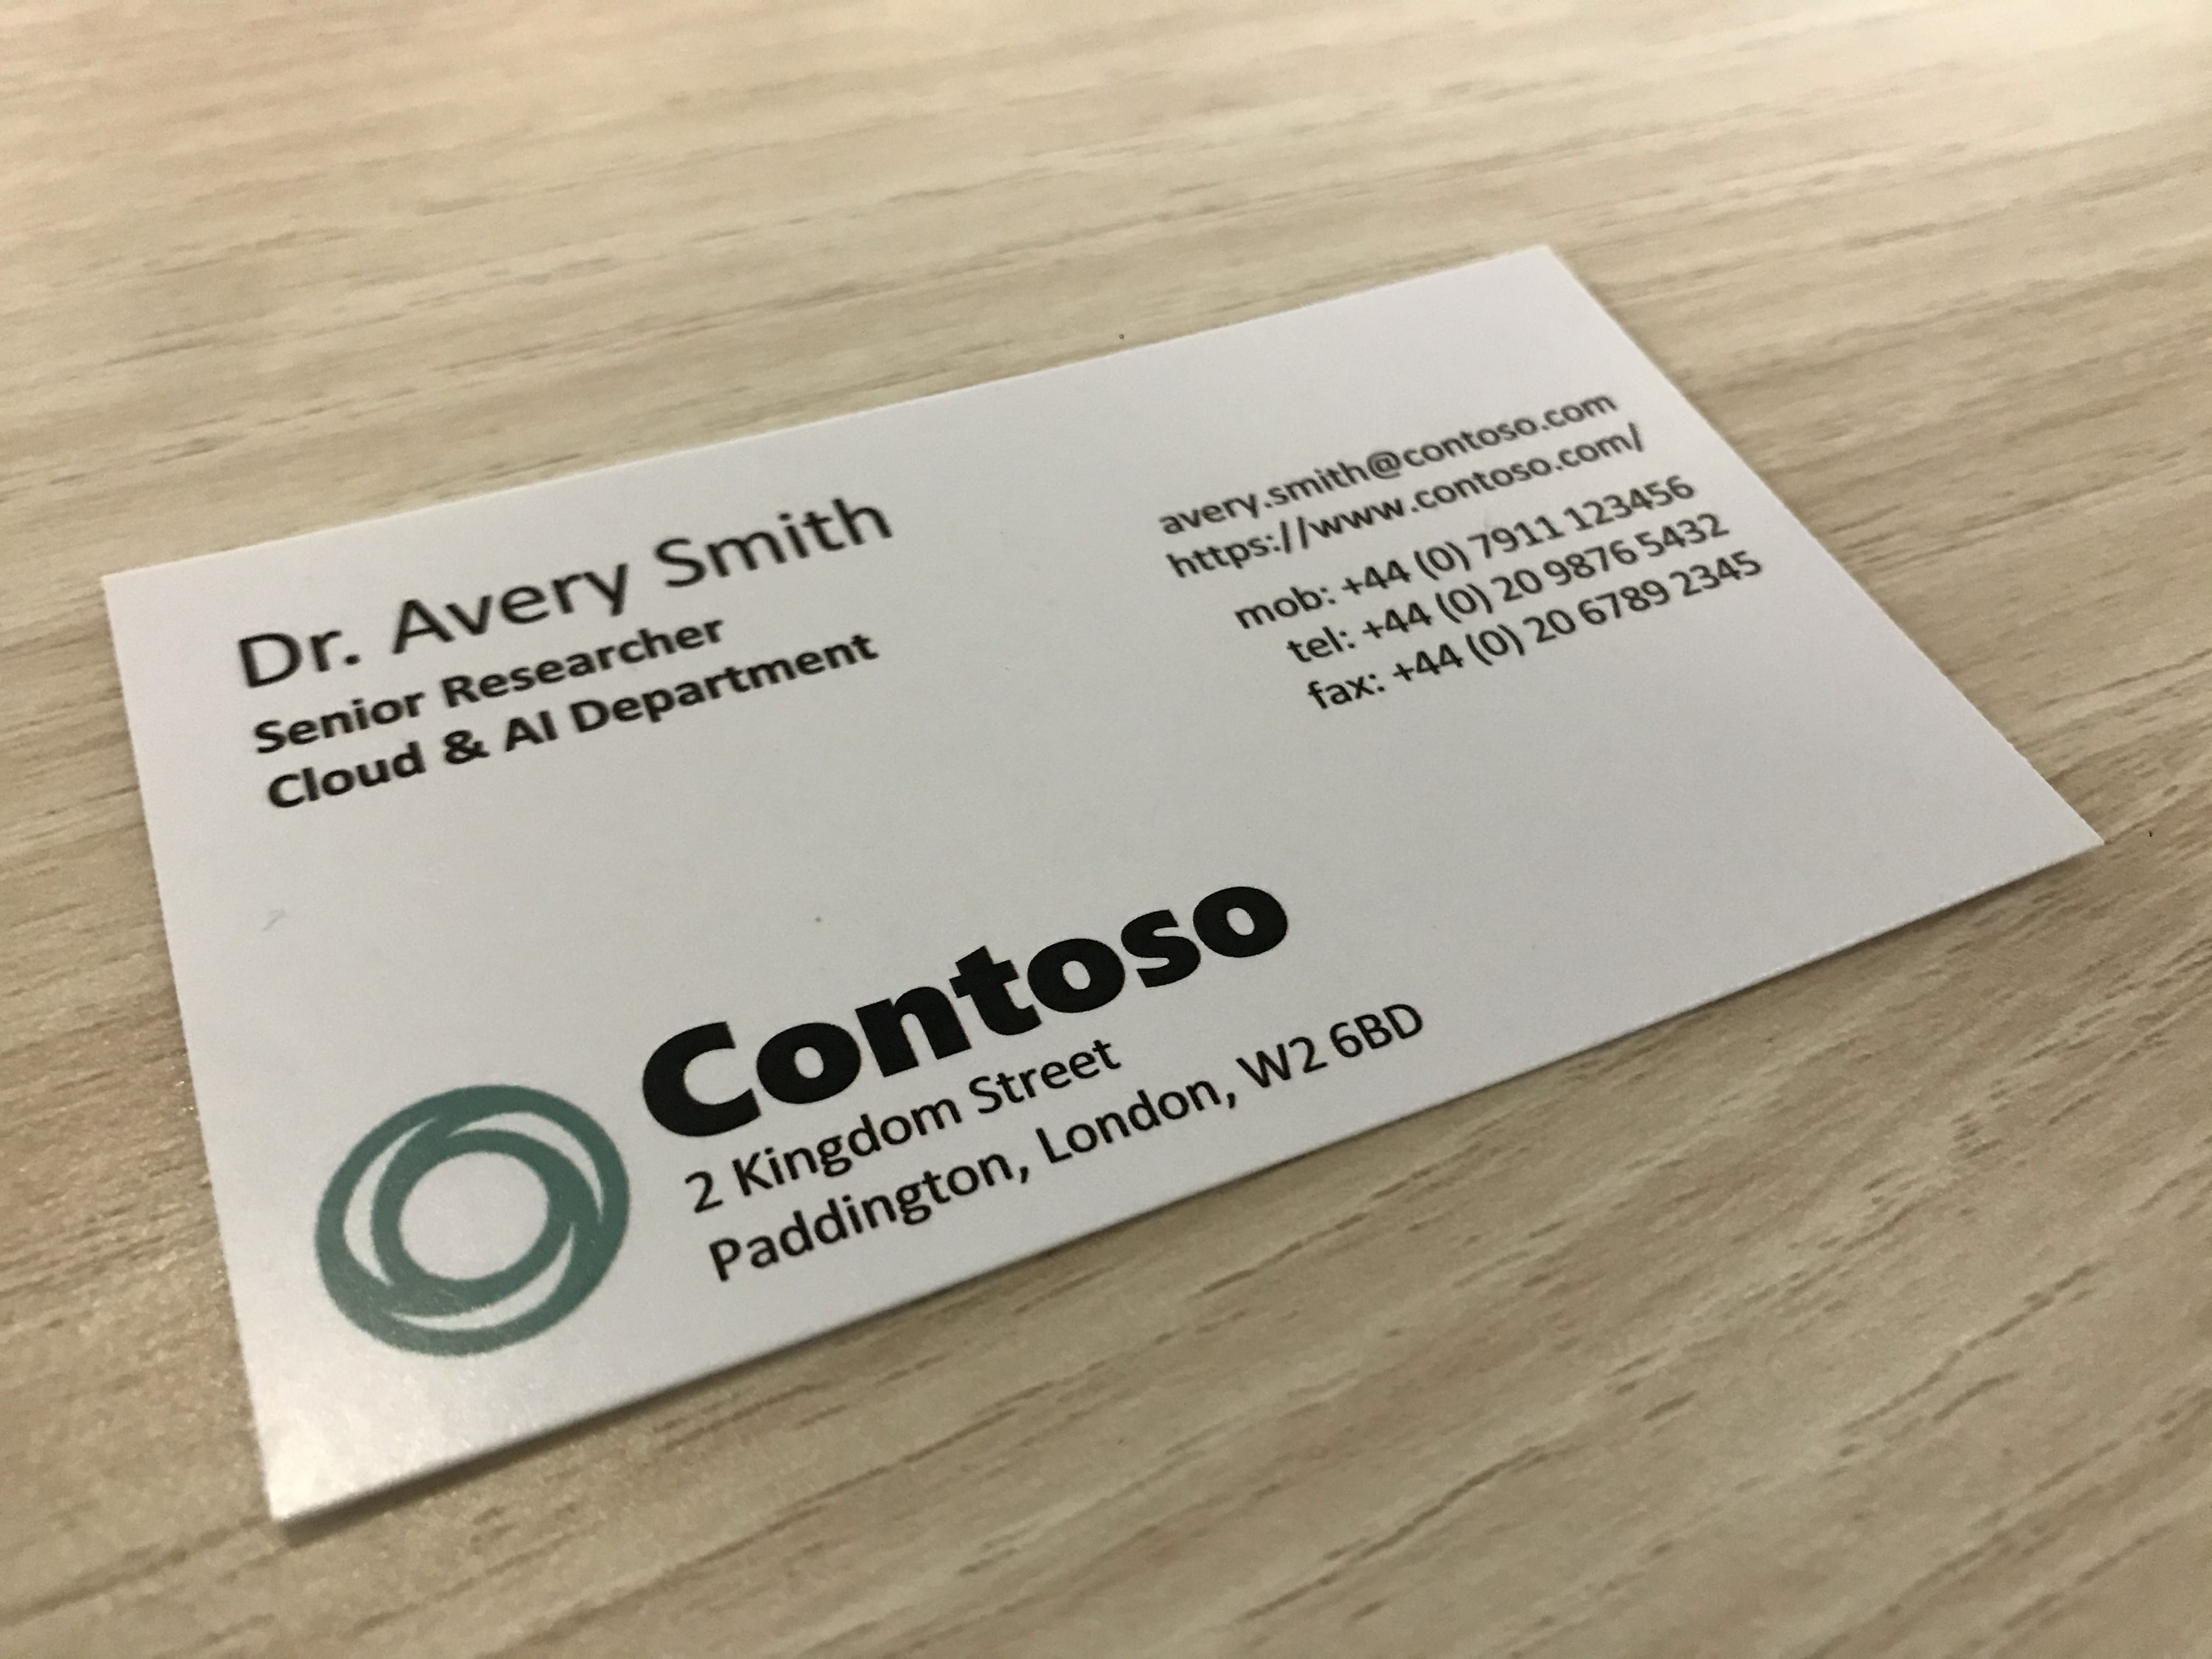 Abbildung: Visitenkarte eines Unternehmens namens Contoso